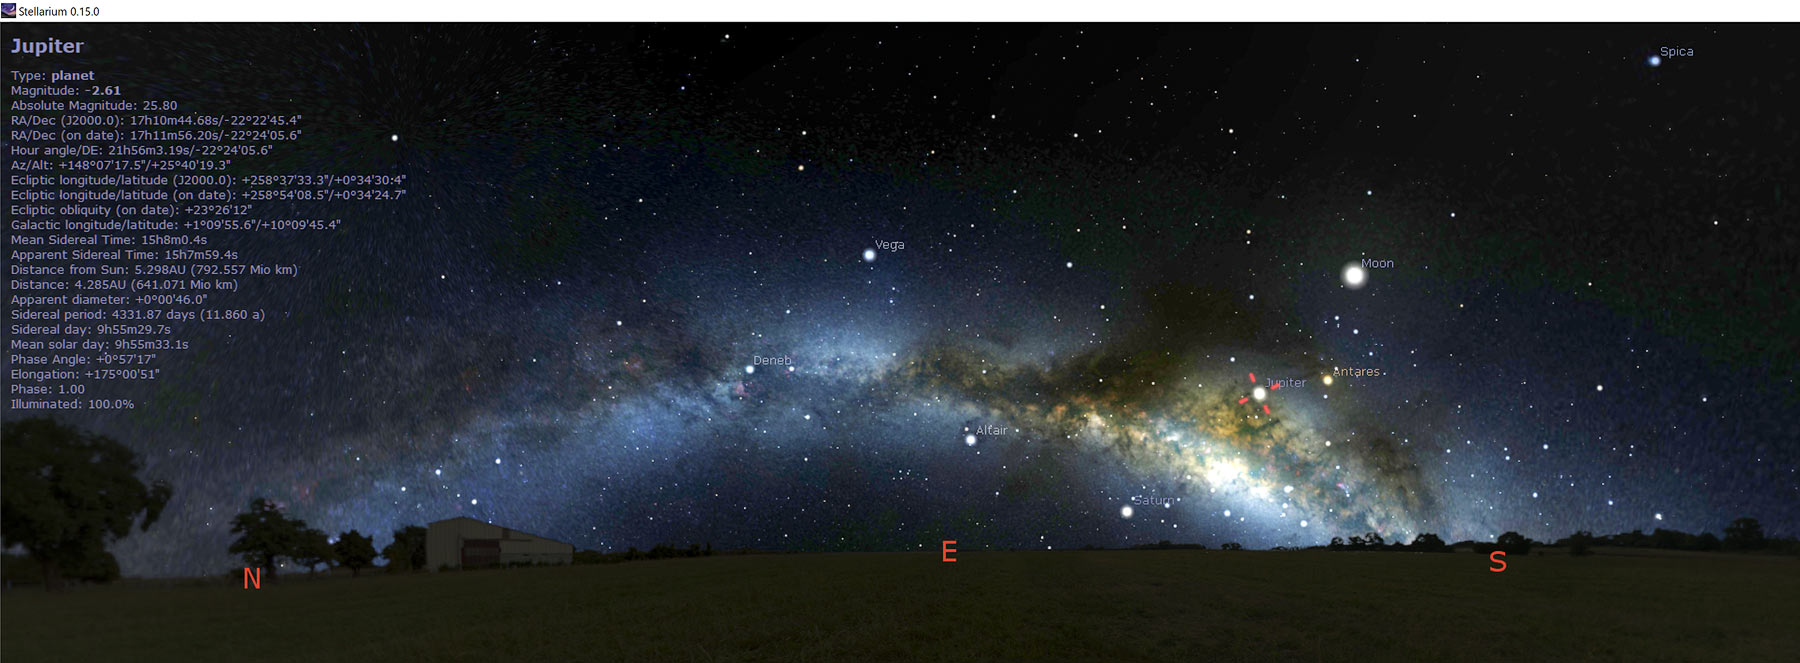 Screen Capture of the Sedona night sky from Stellarium